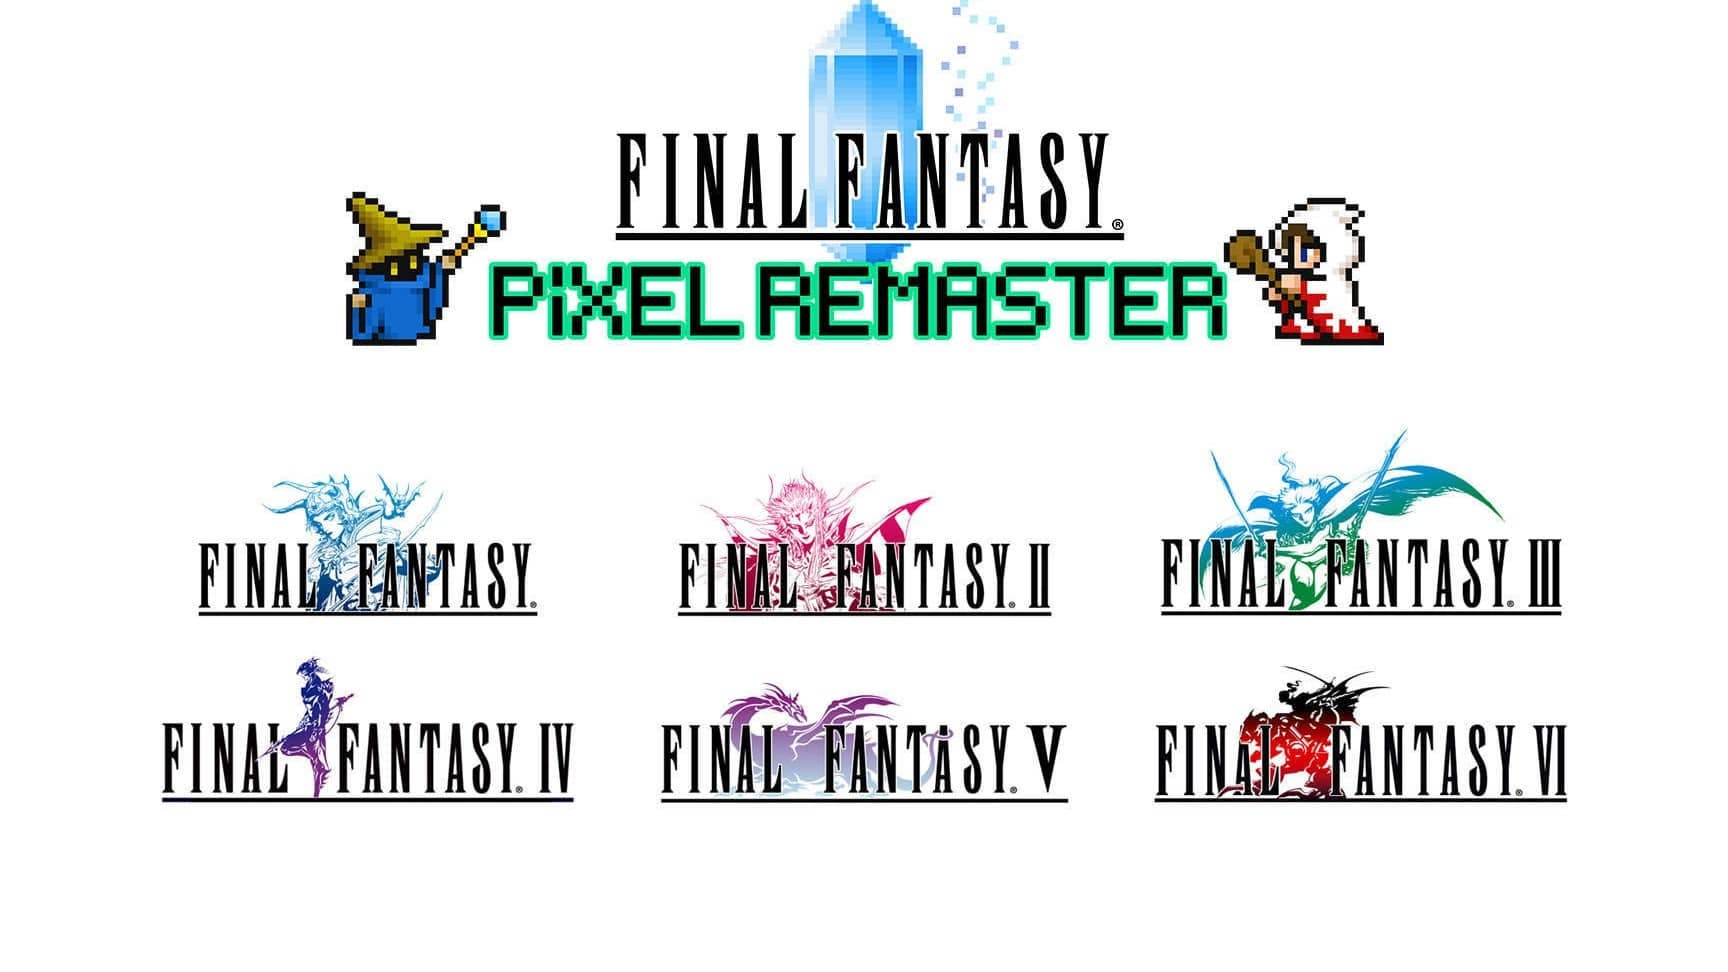 Final Fantasy Pixel Remaster Switch